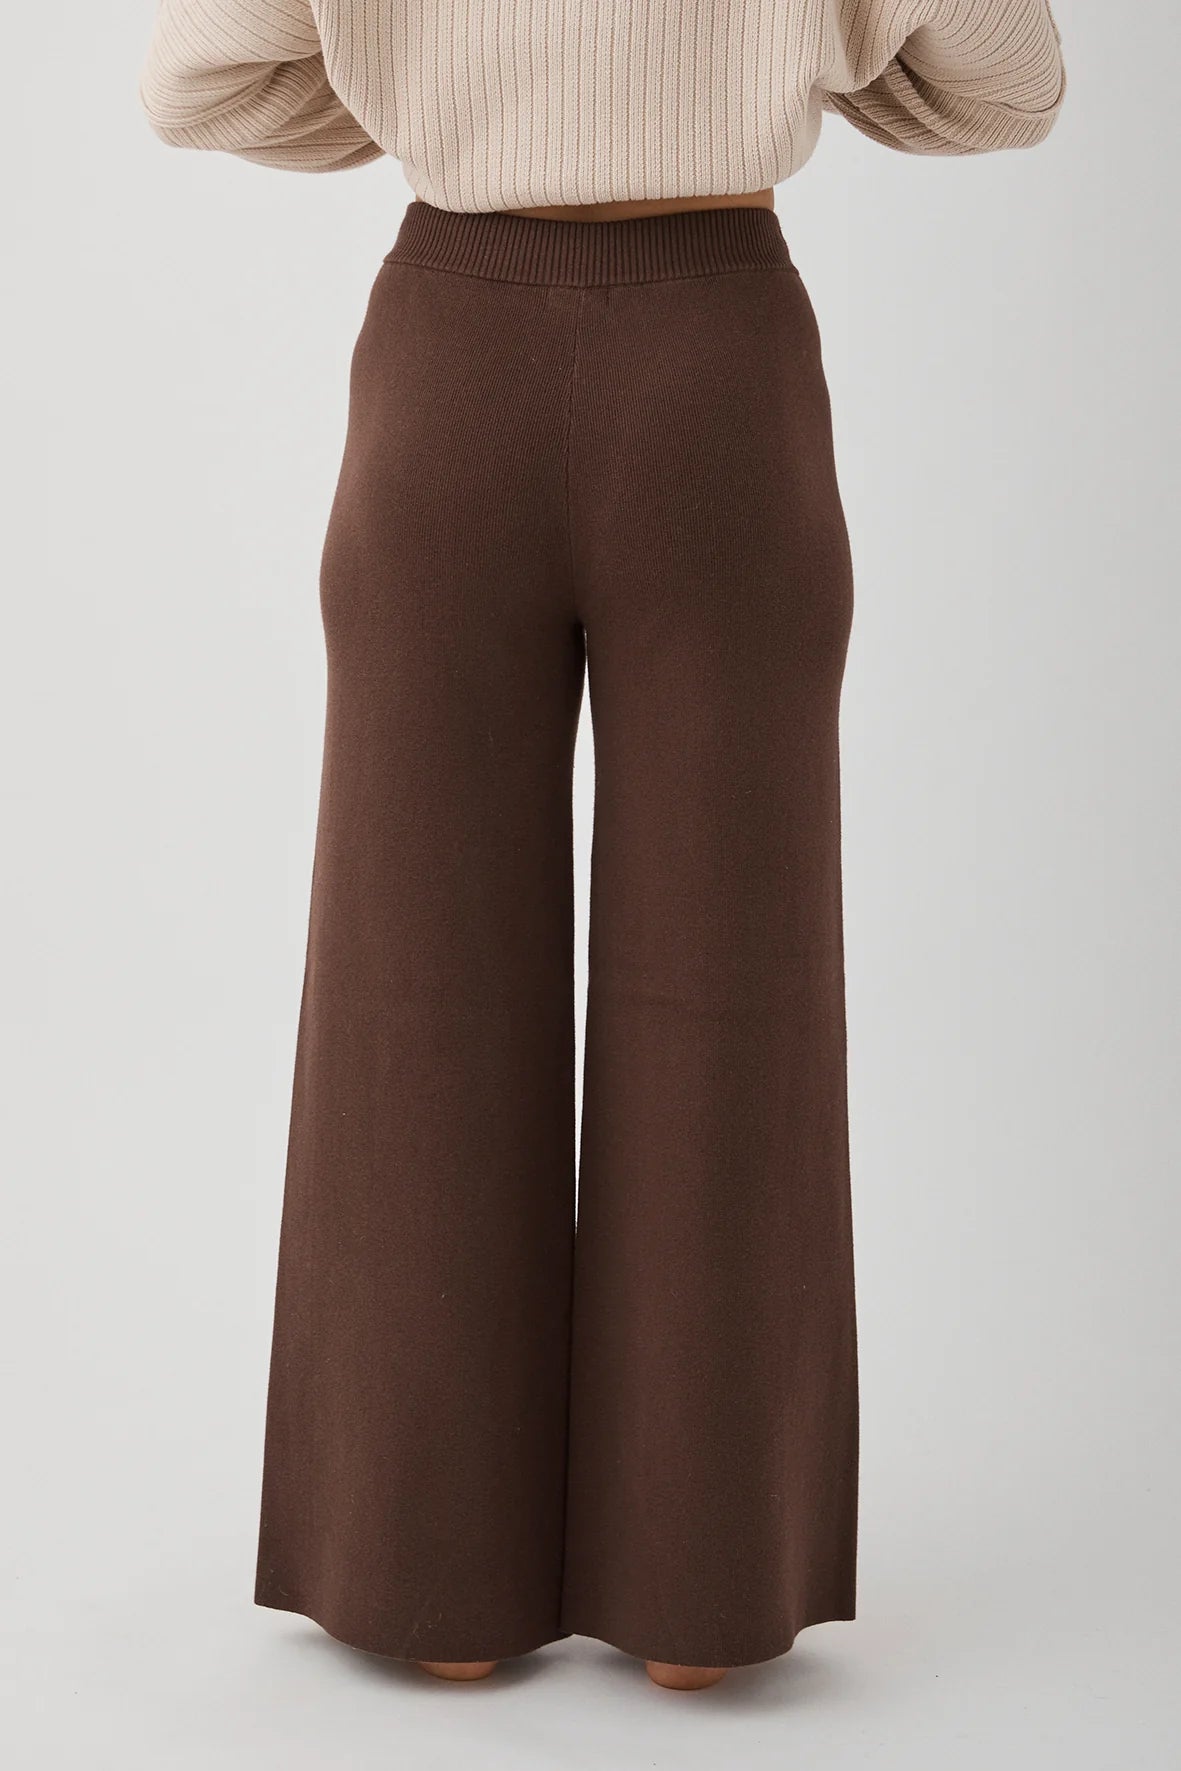 Harriet Organic Knit Pants // Chocolate